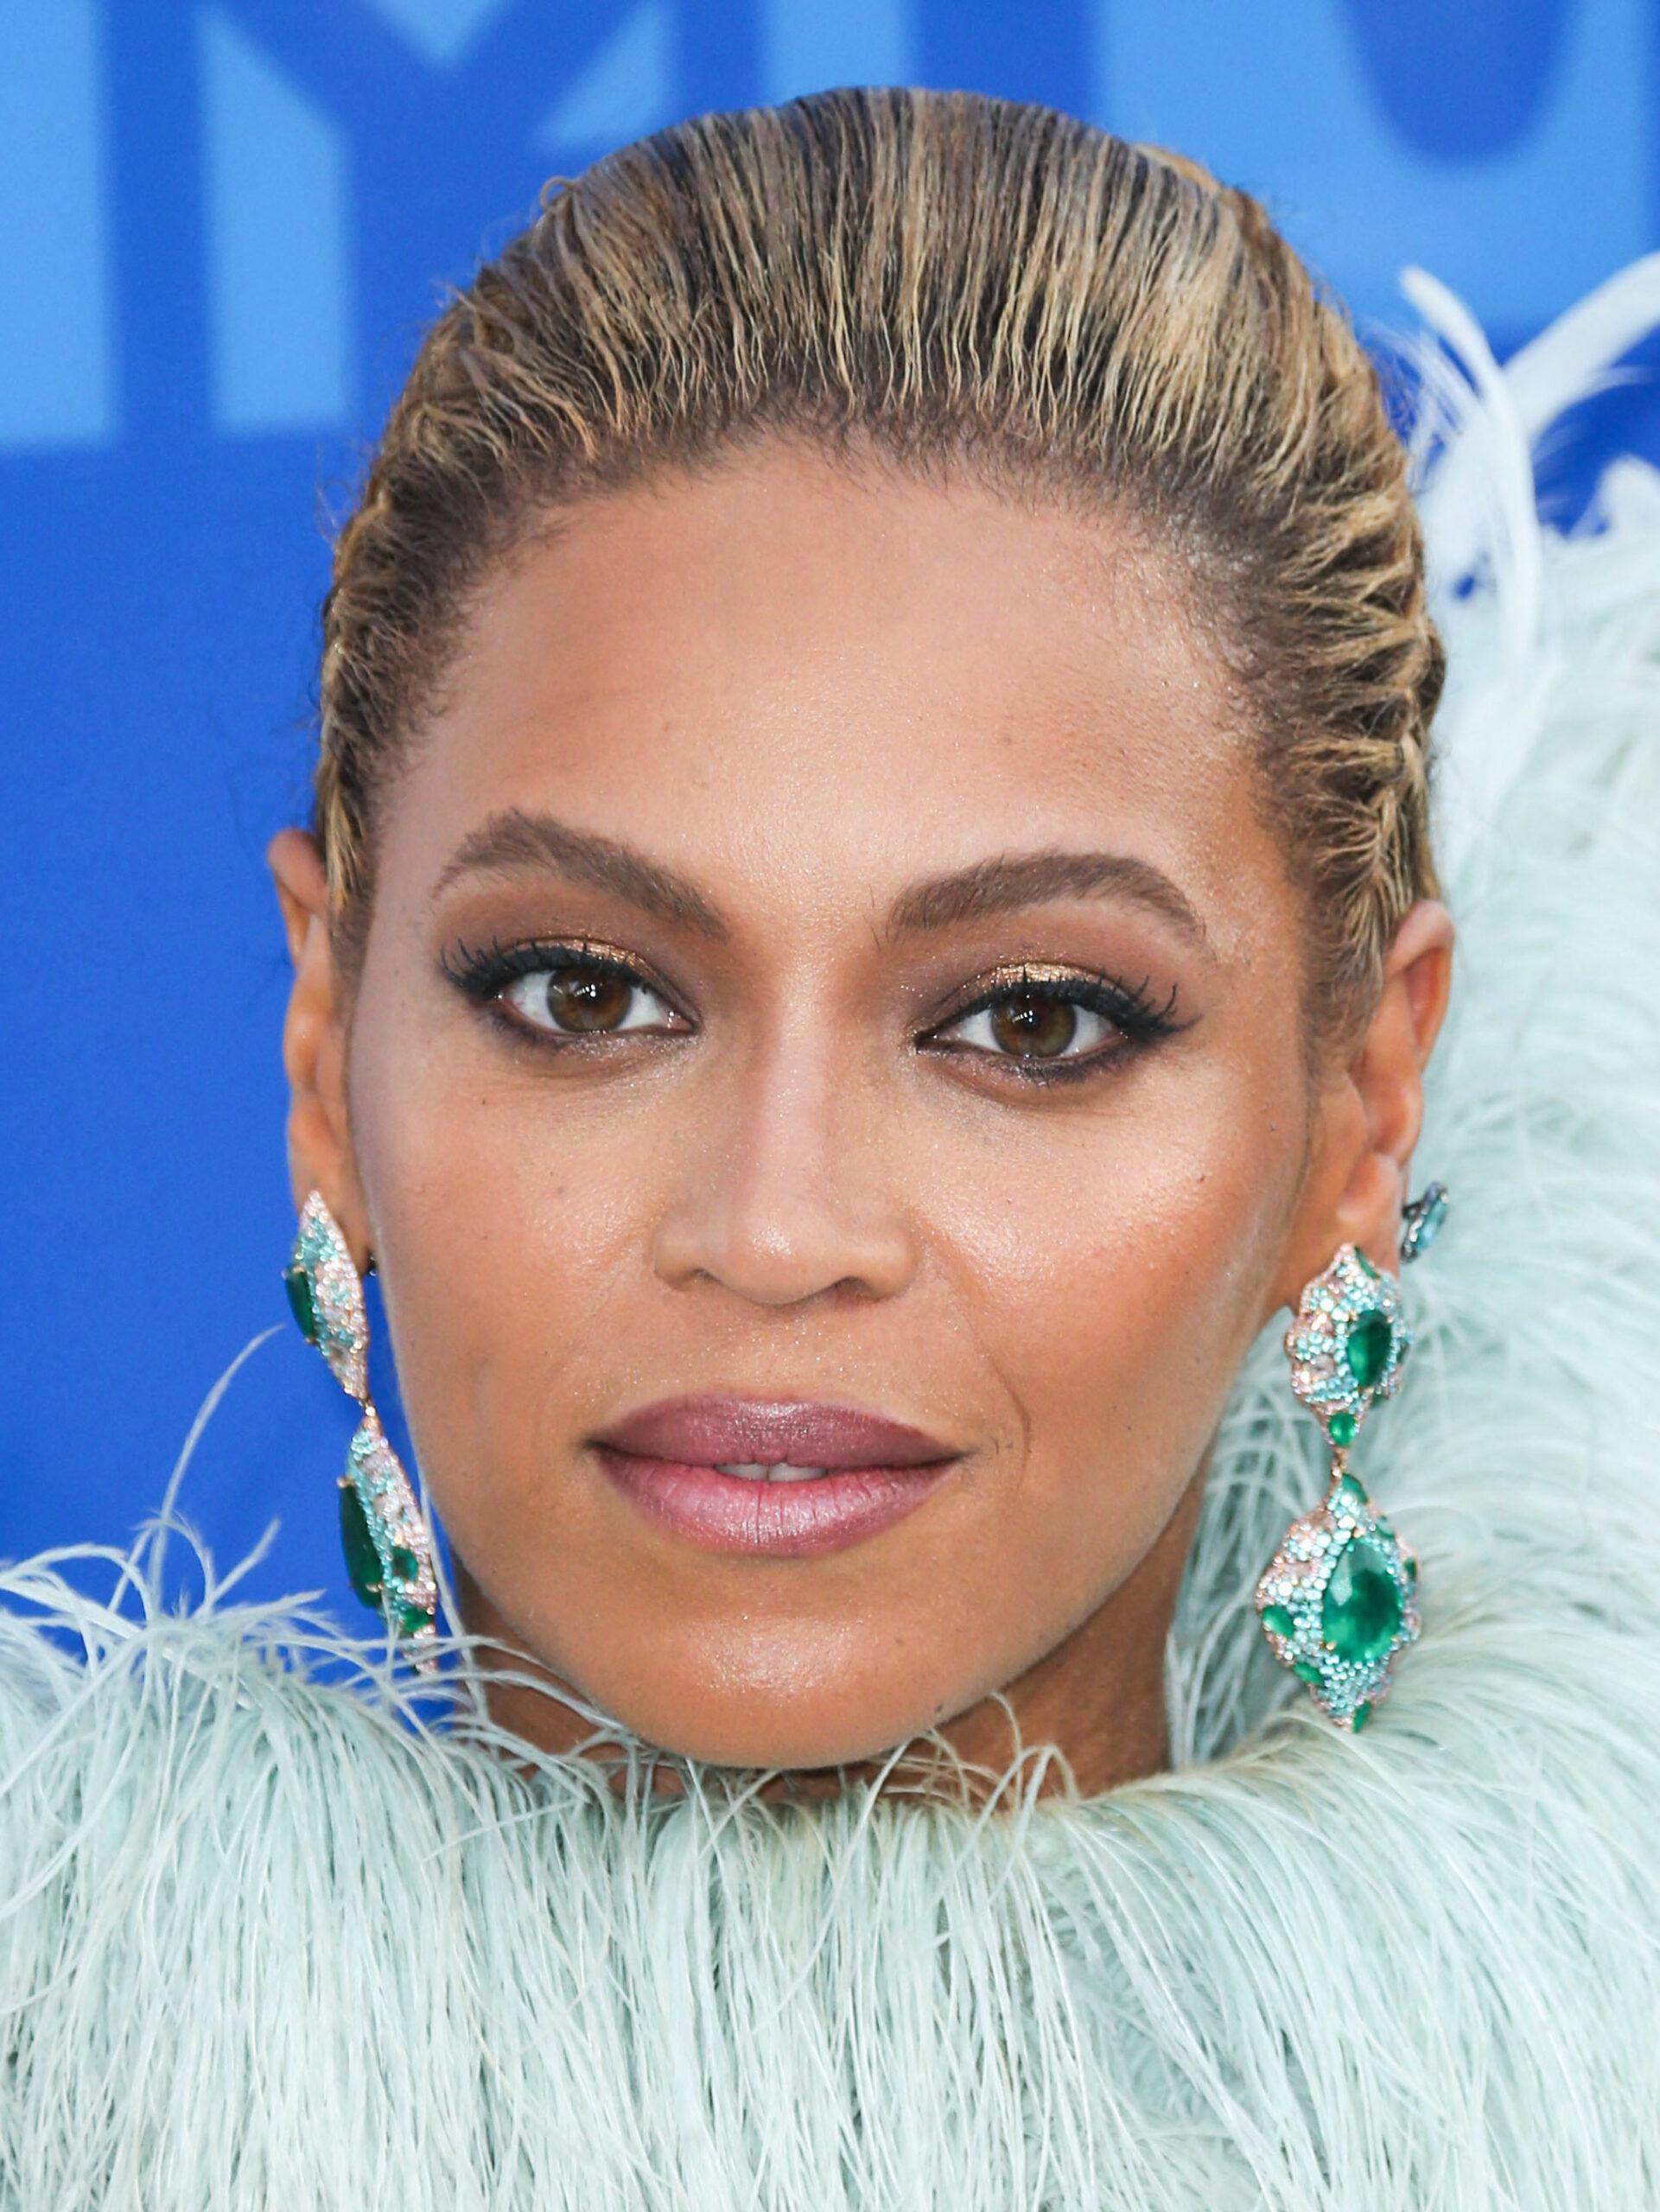 Beyoncé Drops Surprise 'Texas Hold 'Em' Remix With Brand-New Lyrics